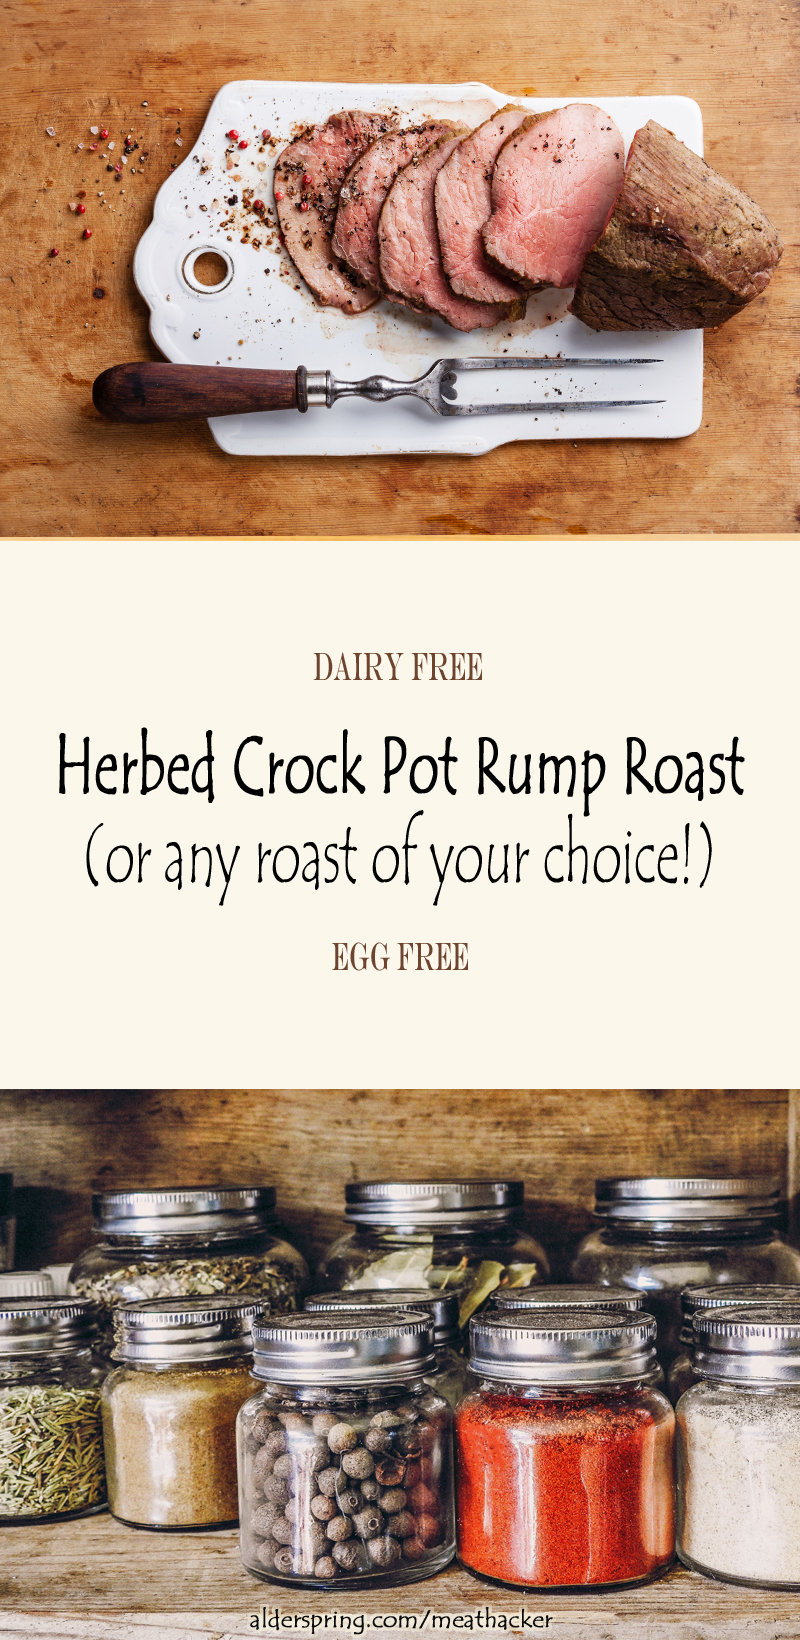 Herbed Crock Pot Rump Roast Recipe